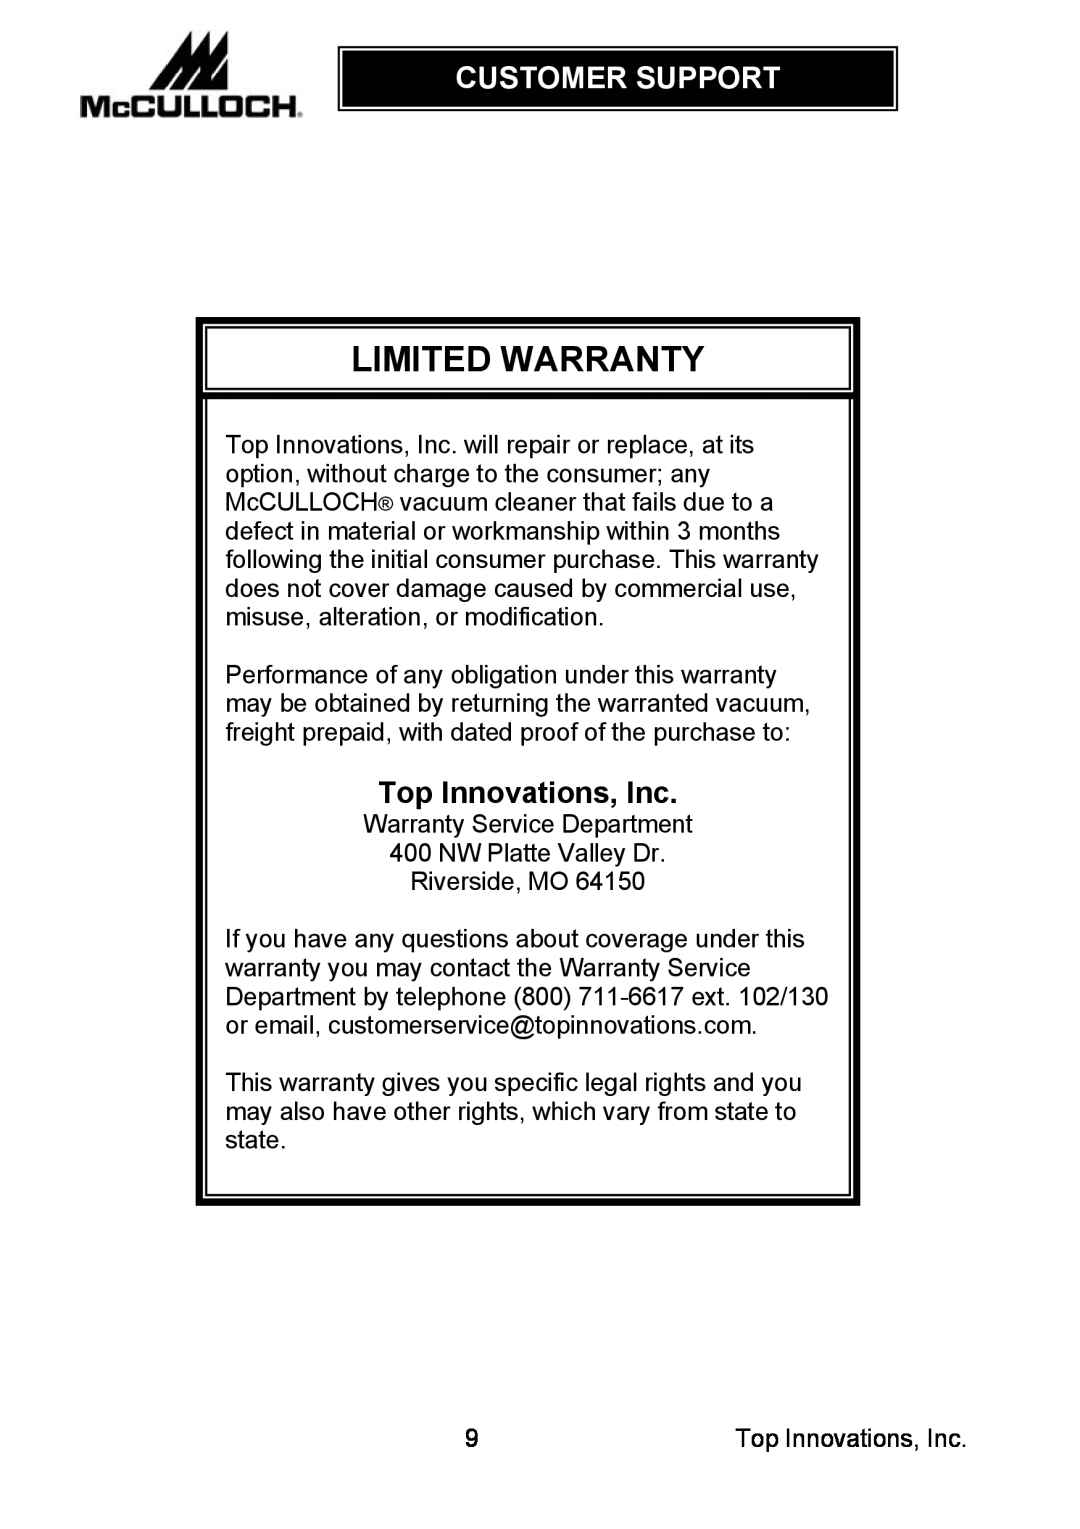 Top Innovations MC1910 warranty Limited Warranty, Customer Support, Top Innovations, Inc 